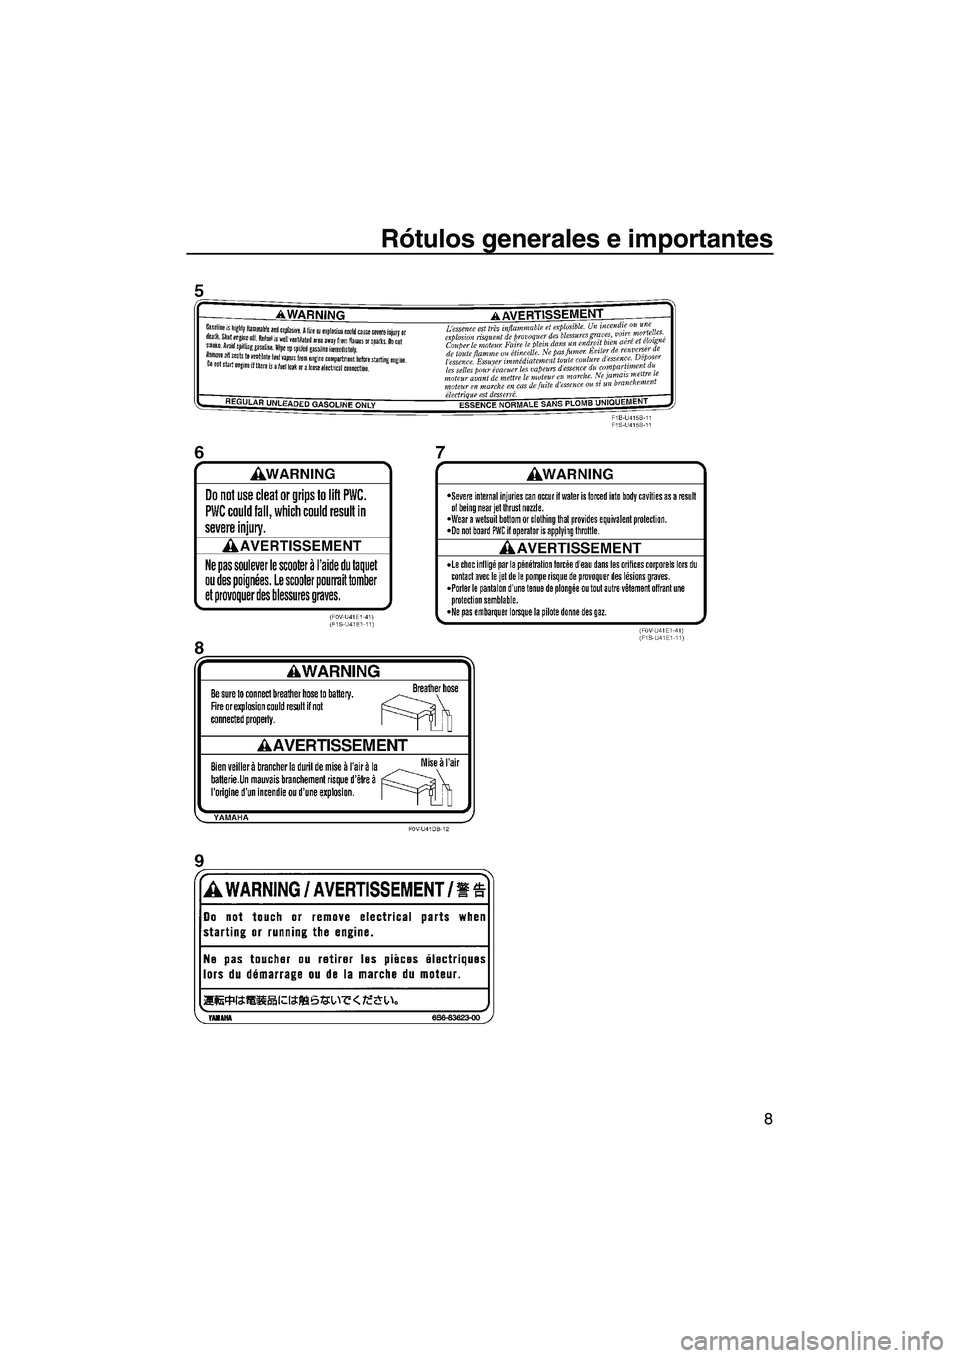 YAMAHA VX 2007  Manuale de Empleo (in Spanish) Rótulos generales e importantes
8
UF1K72S0.book  Page 8  Thursday, August 3, 2006  9:58 AM 